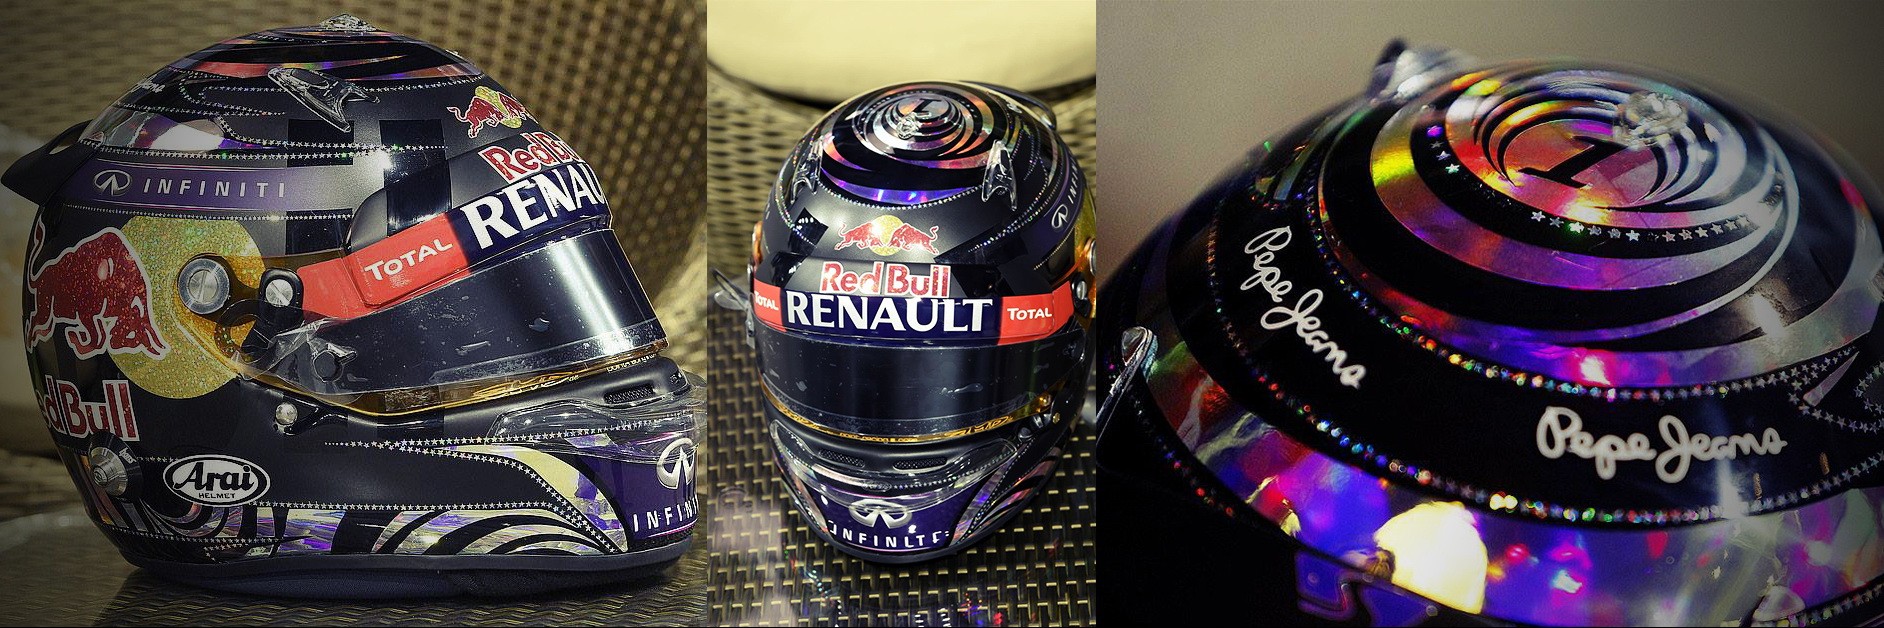 Шлем Себастьяна Феттеля на Гран-При Сингапура 2014 | 2014 Singapore Grand Prix helmet of Sebastian Vettel